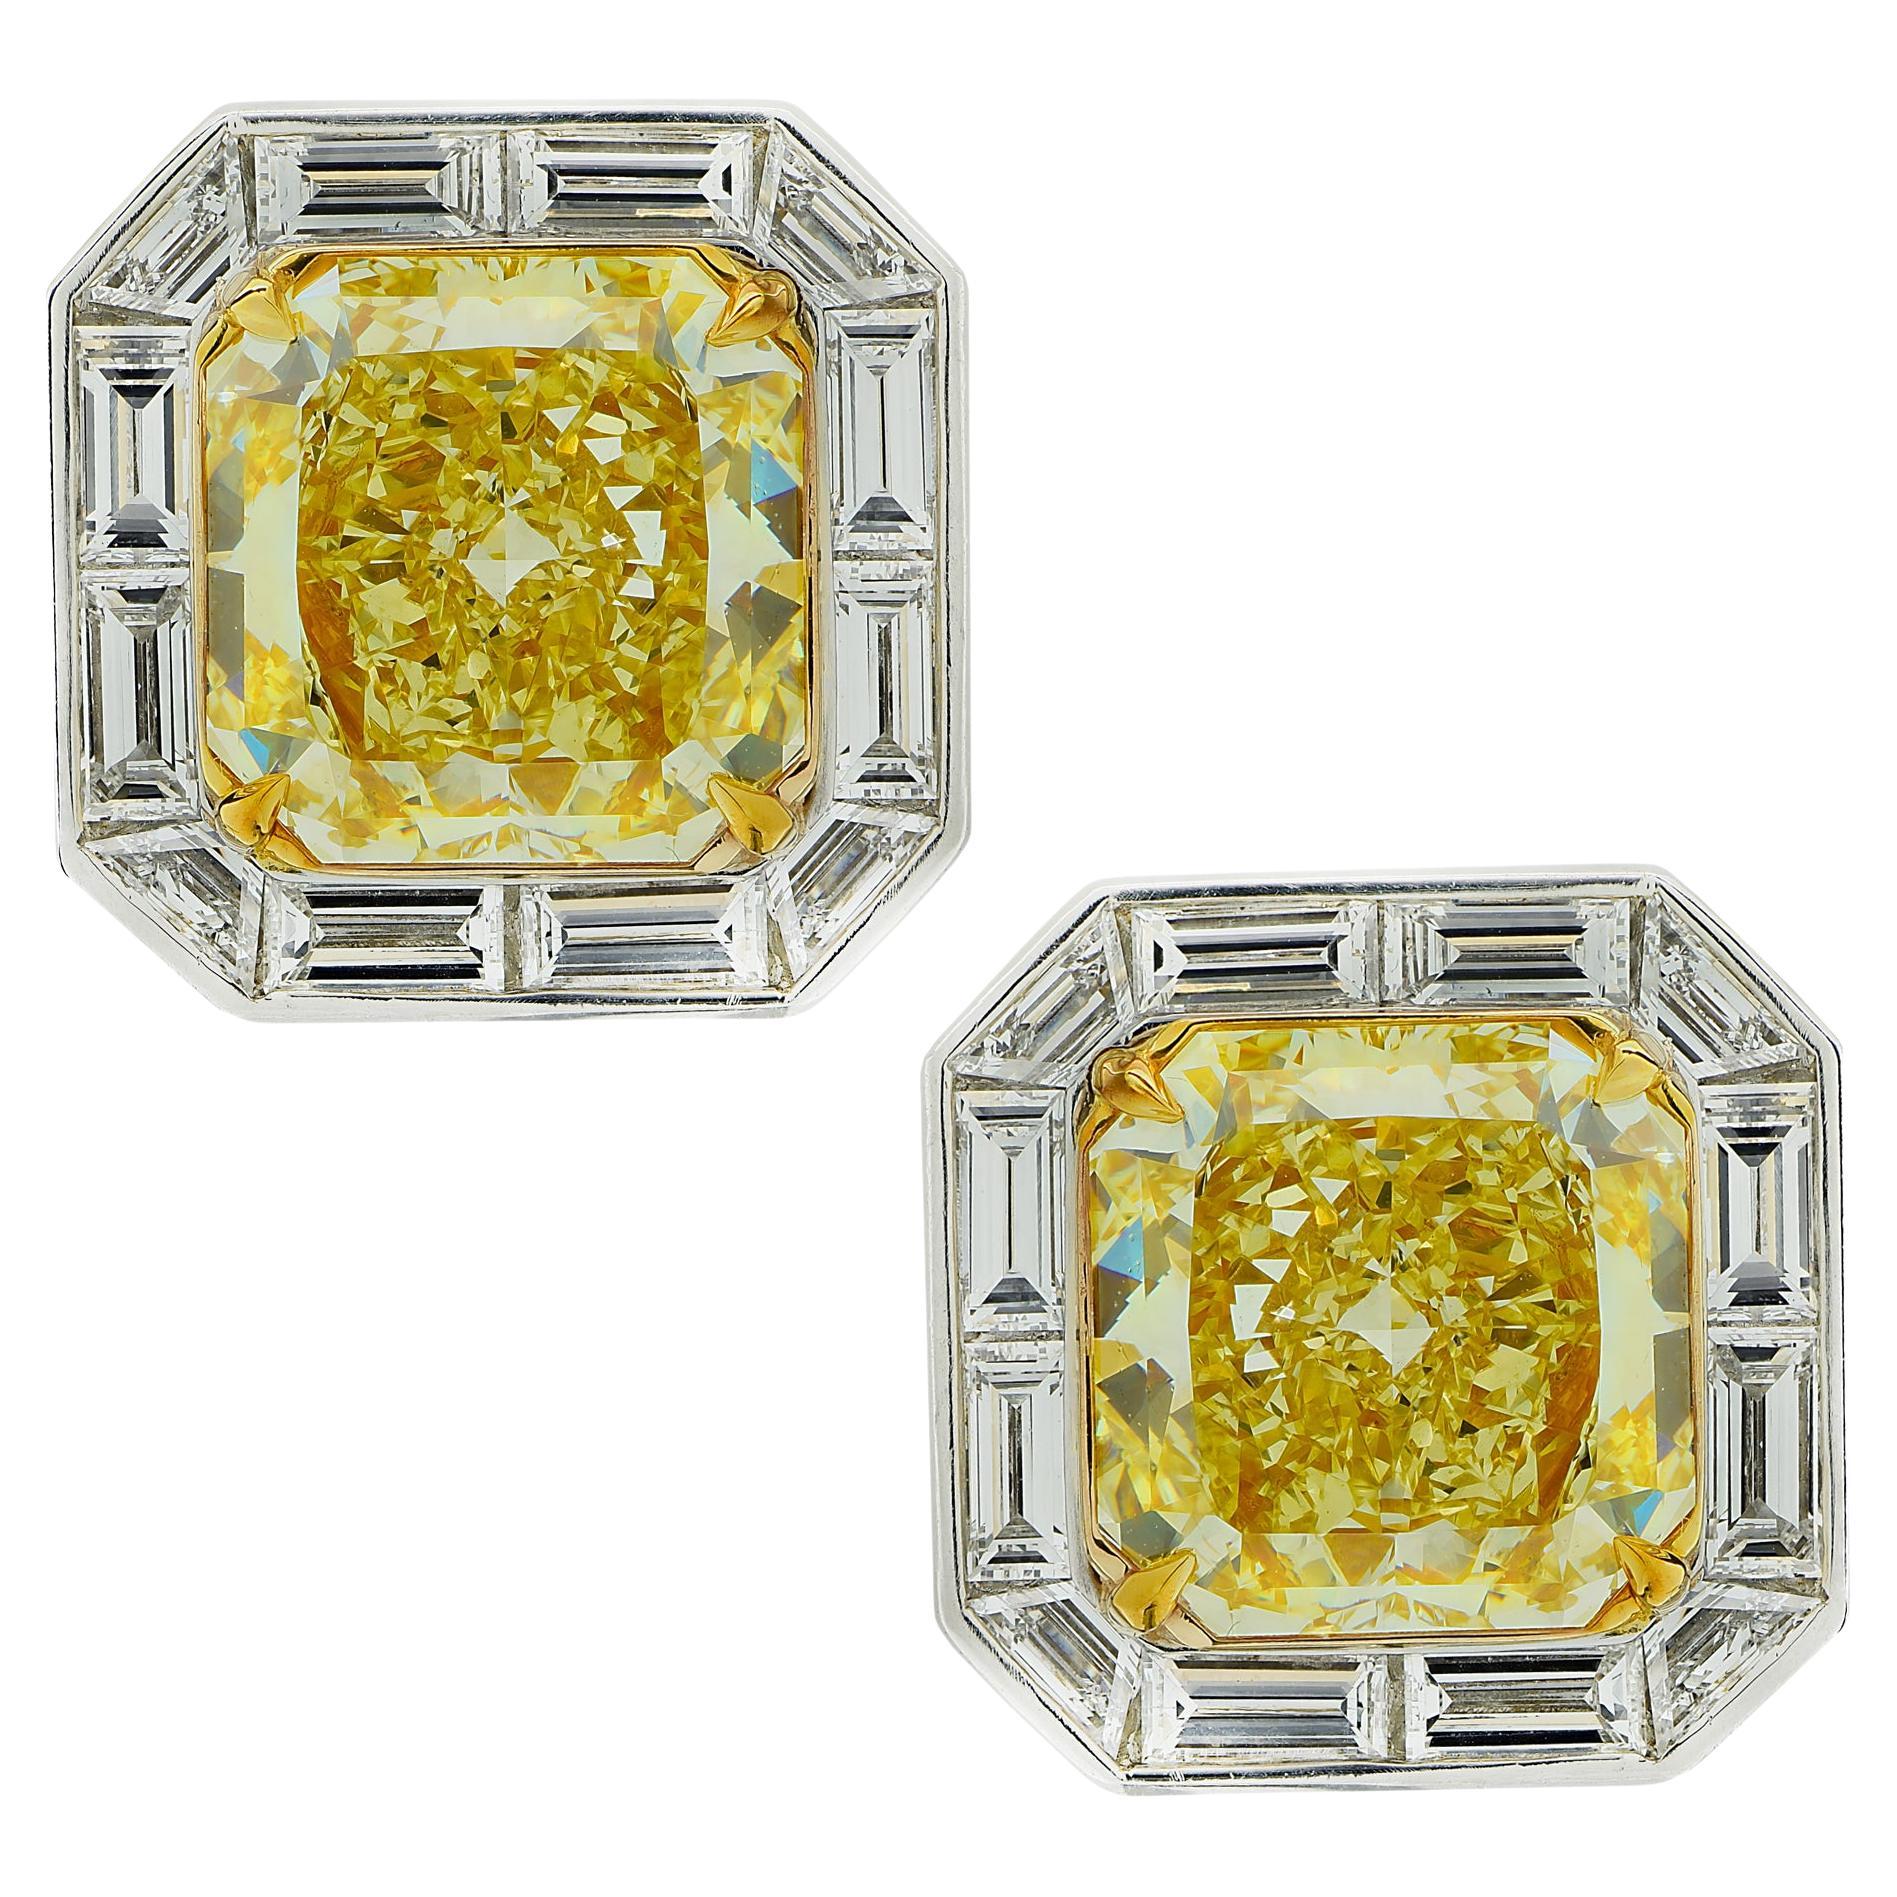 Vivid Diamonds GIA Certified 10.61 Carat Fancy Intense Yellow Diamond Earrings For Sale